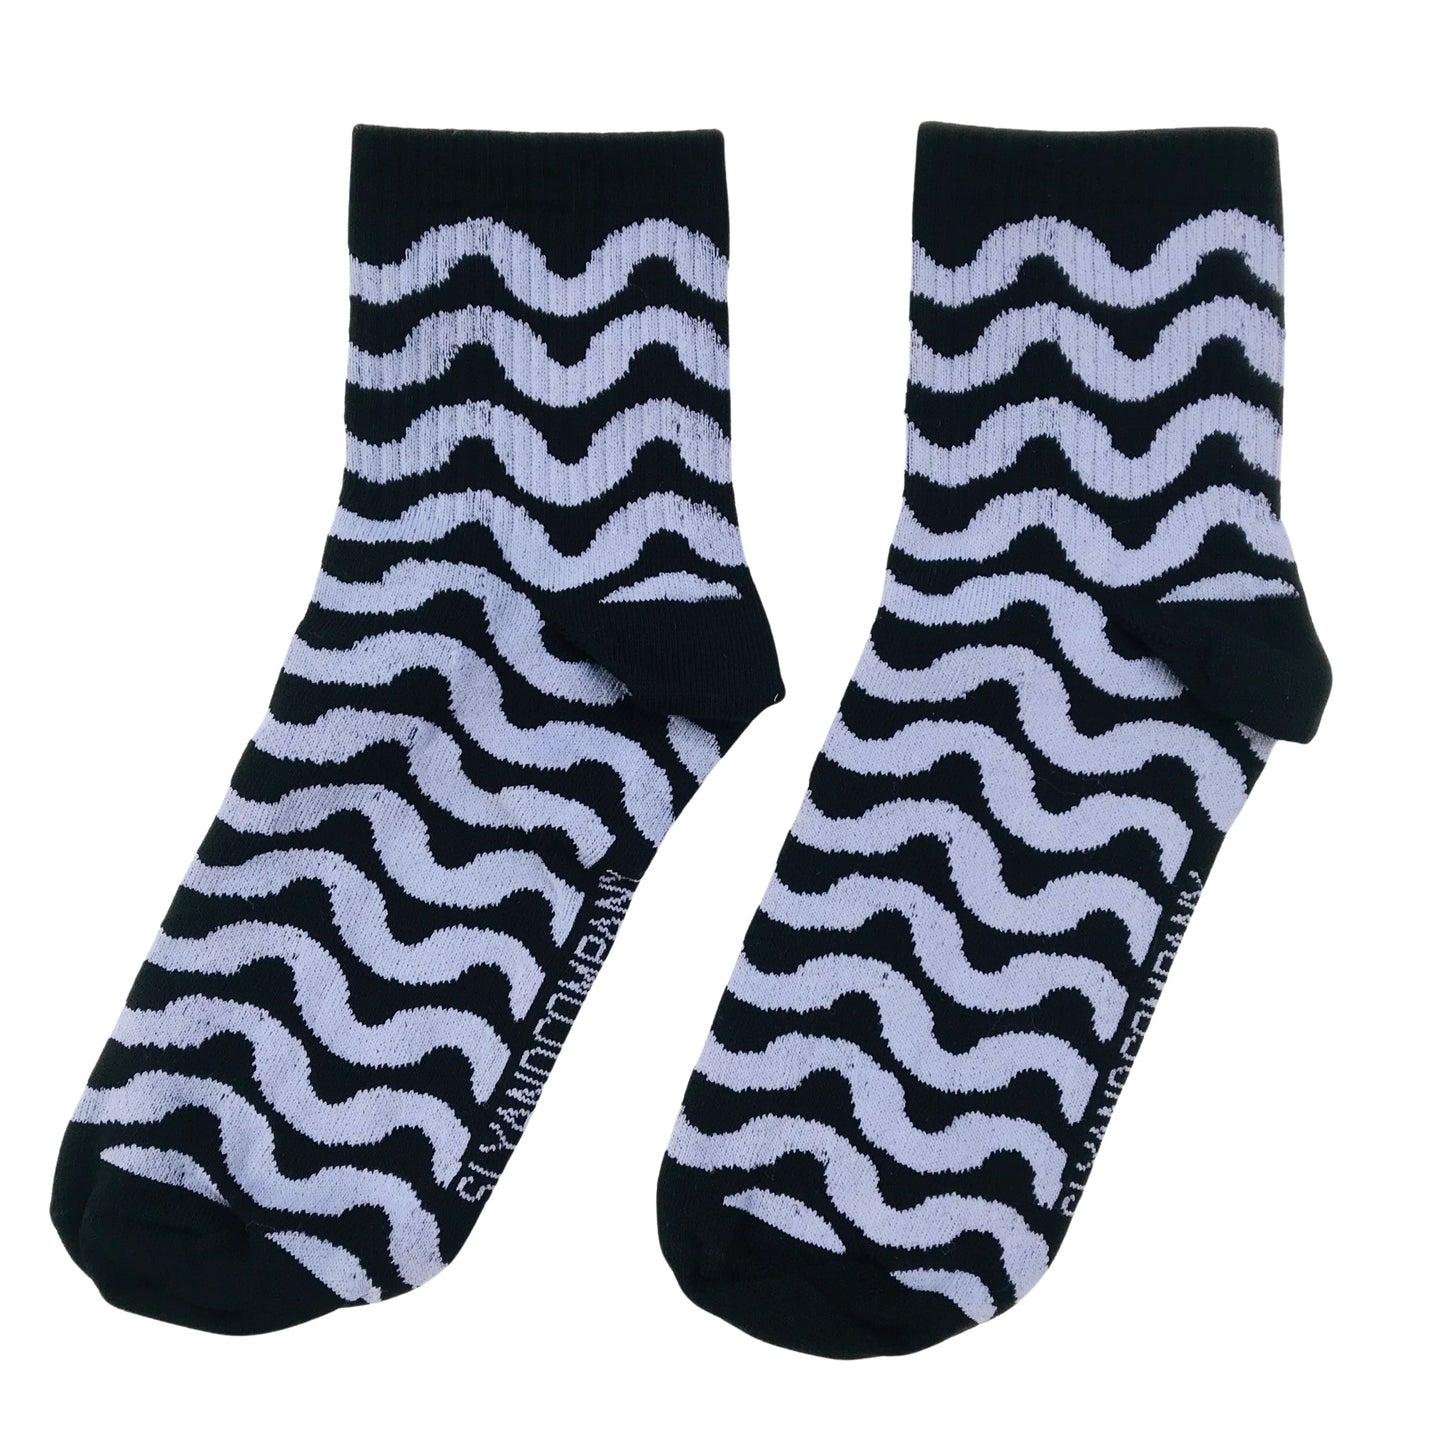 Cotton Ankle Socks - Black & White